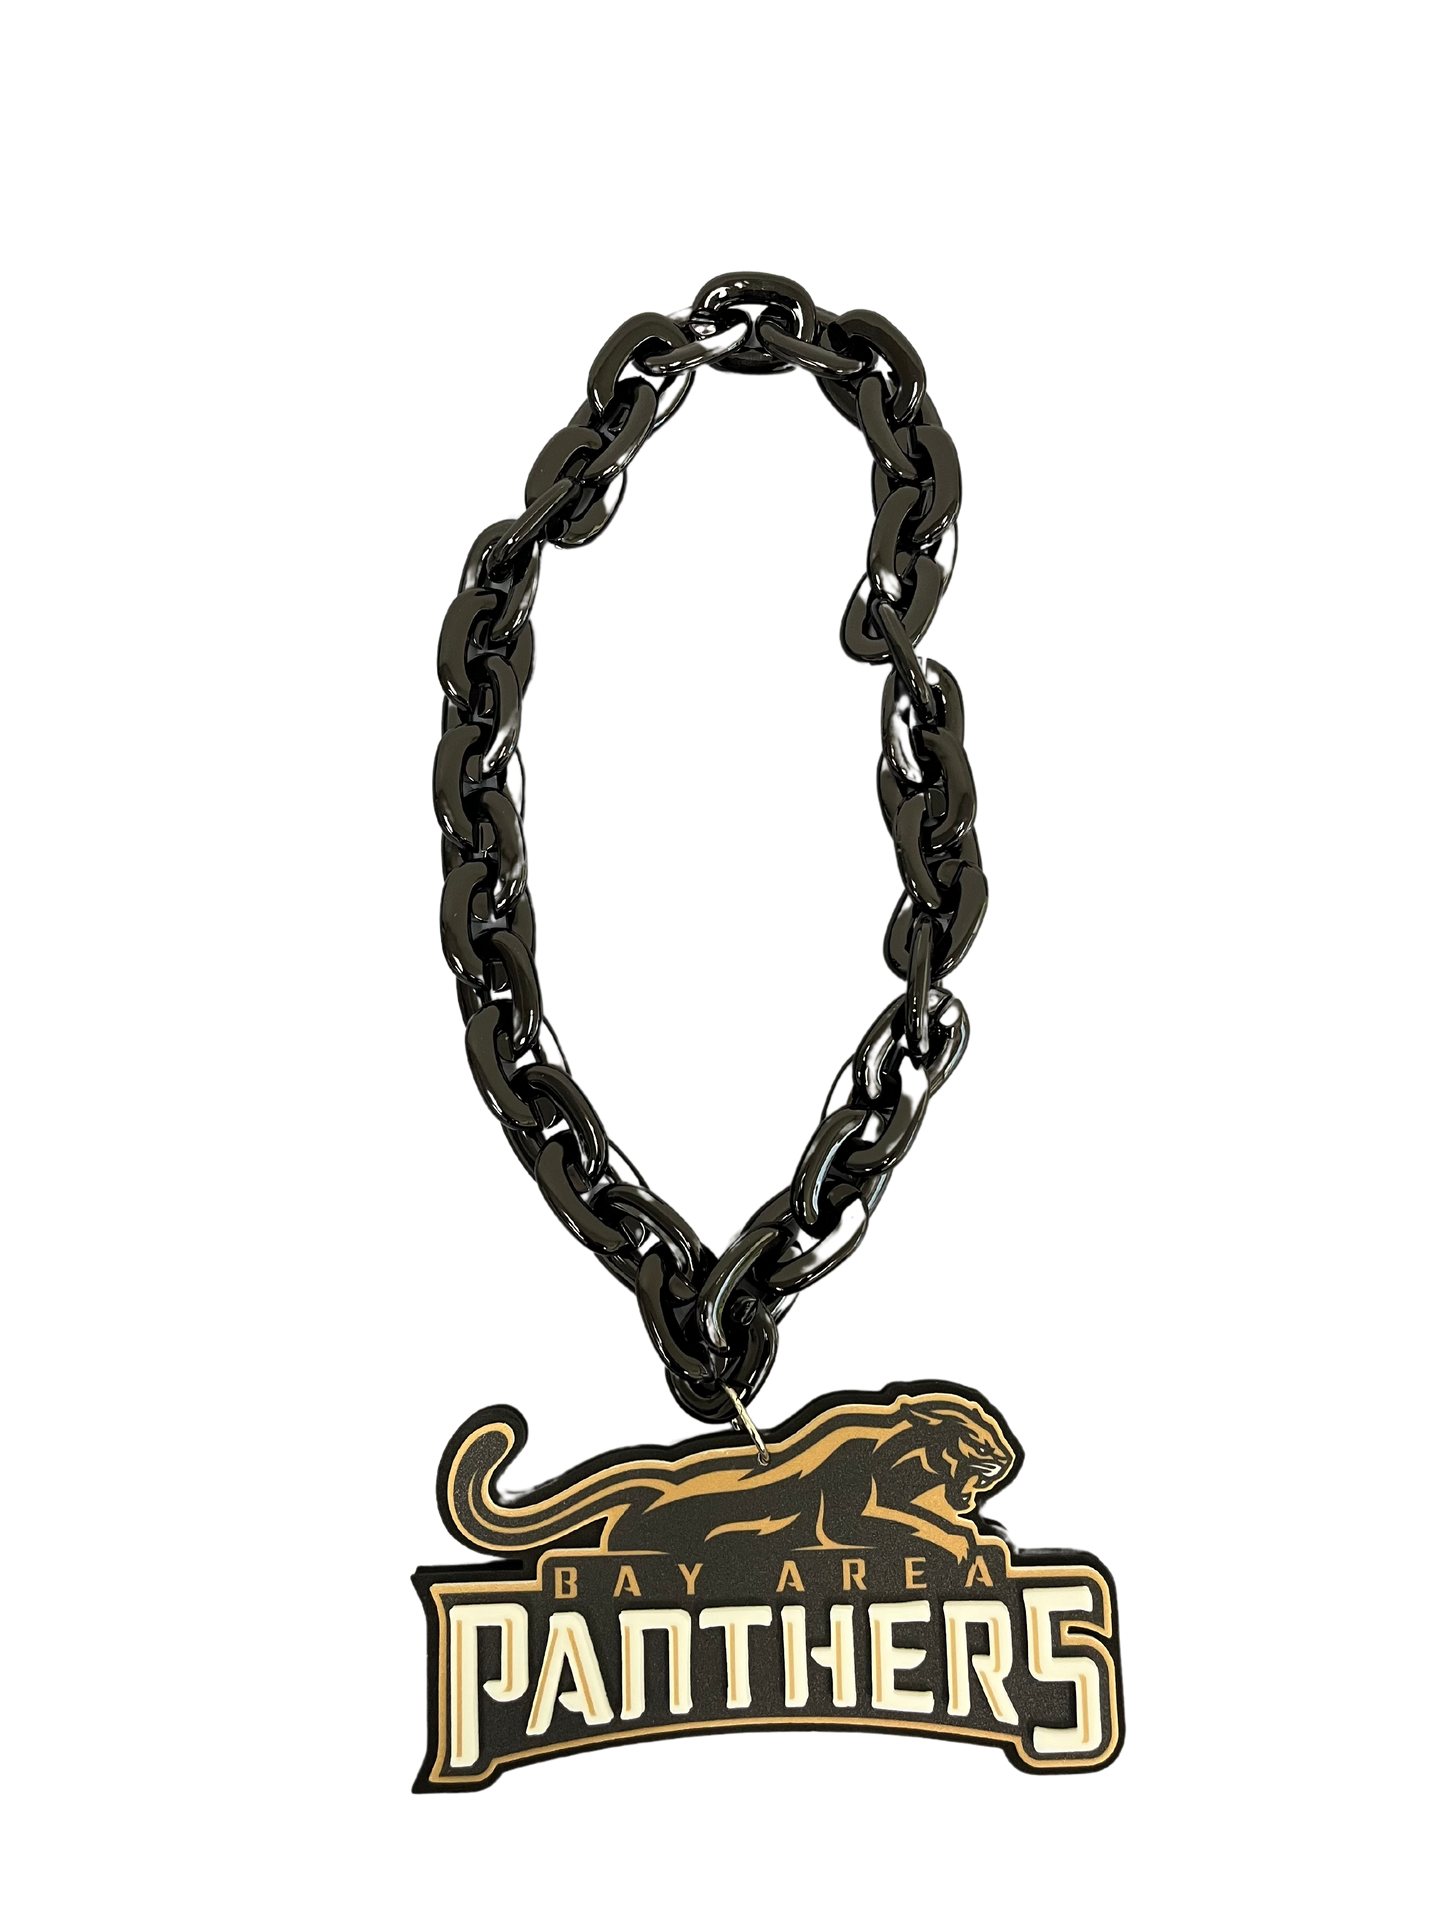 Bay Area Panthers IFL Touchdown Fan Chain 10 inch 3D Foam Necklace (Black)